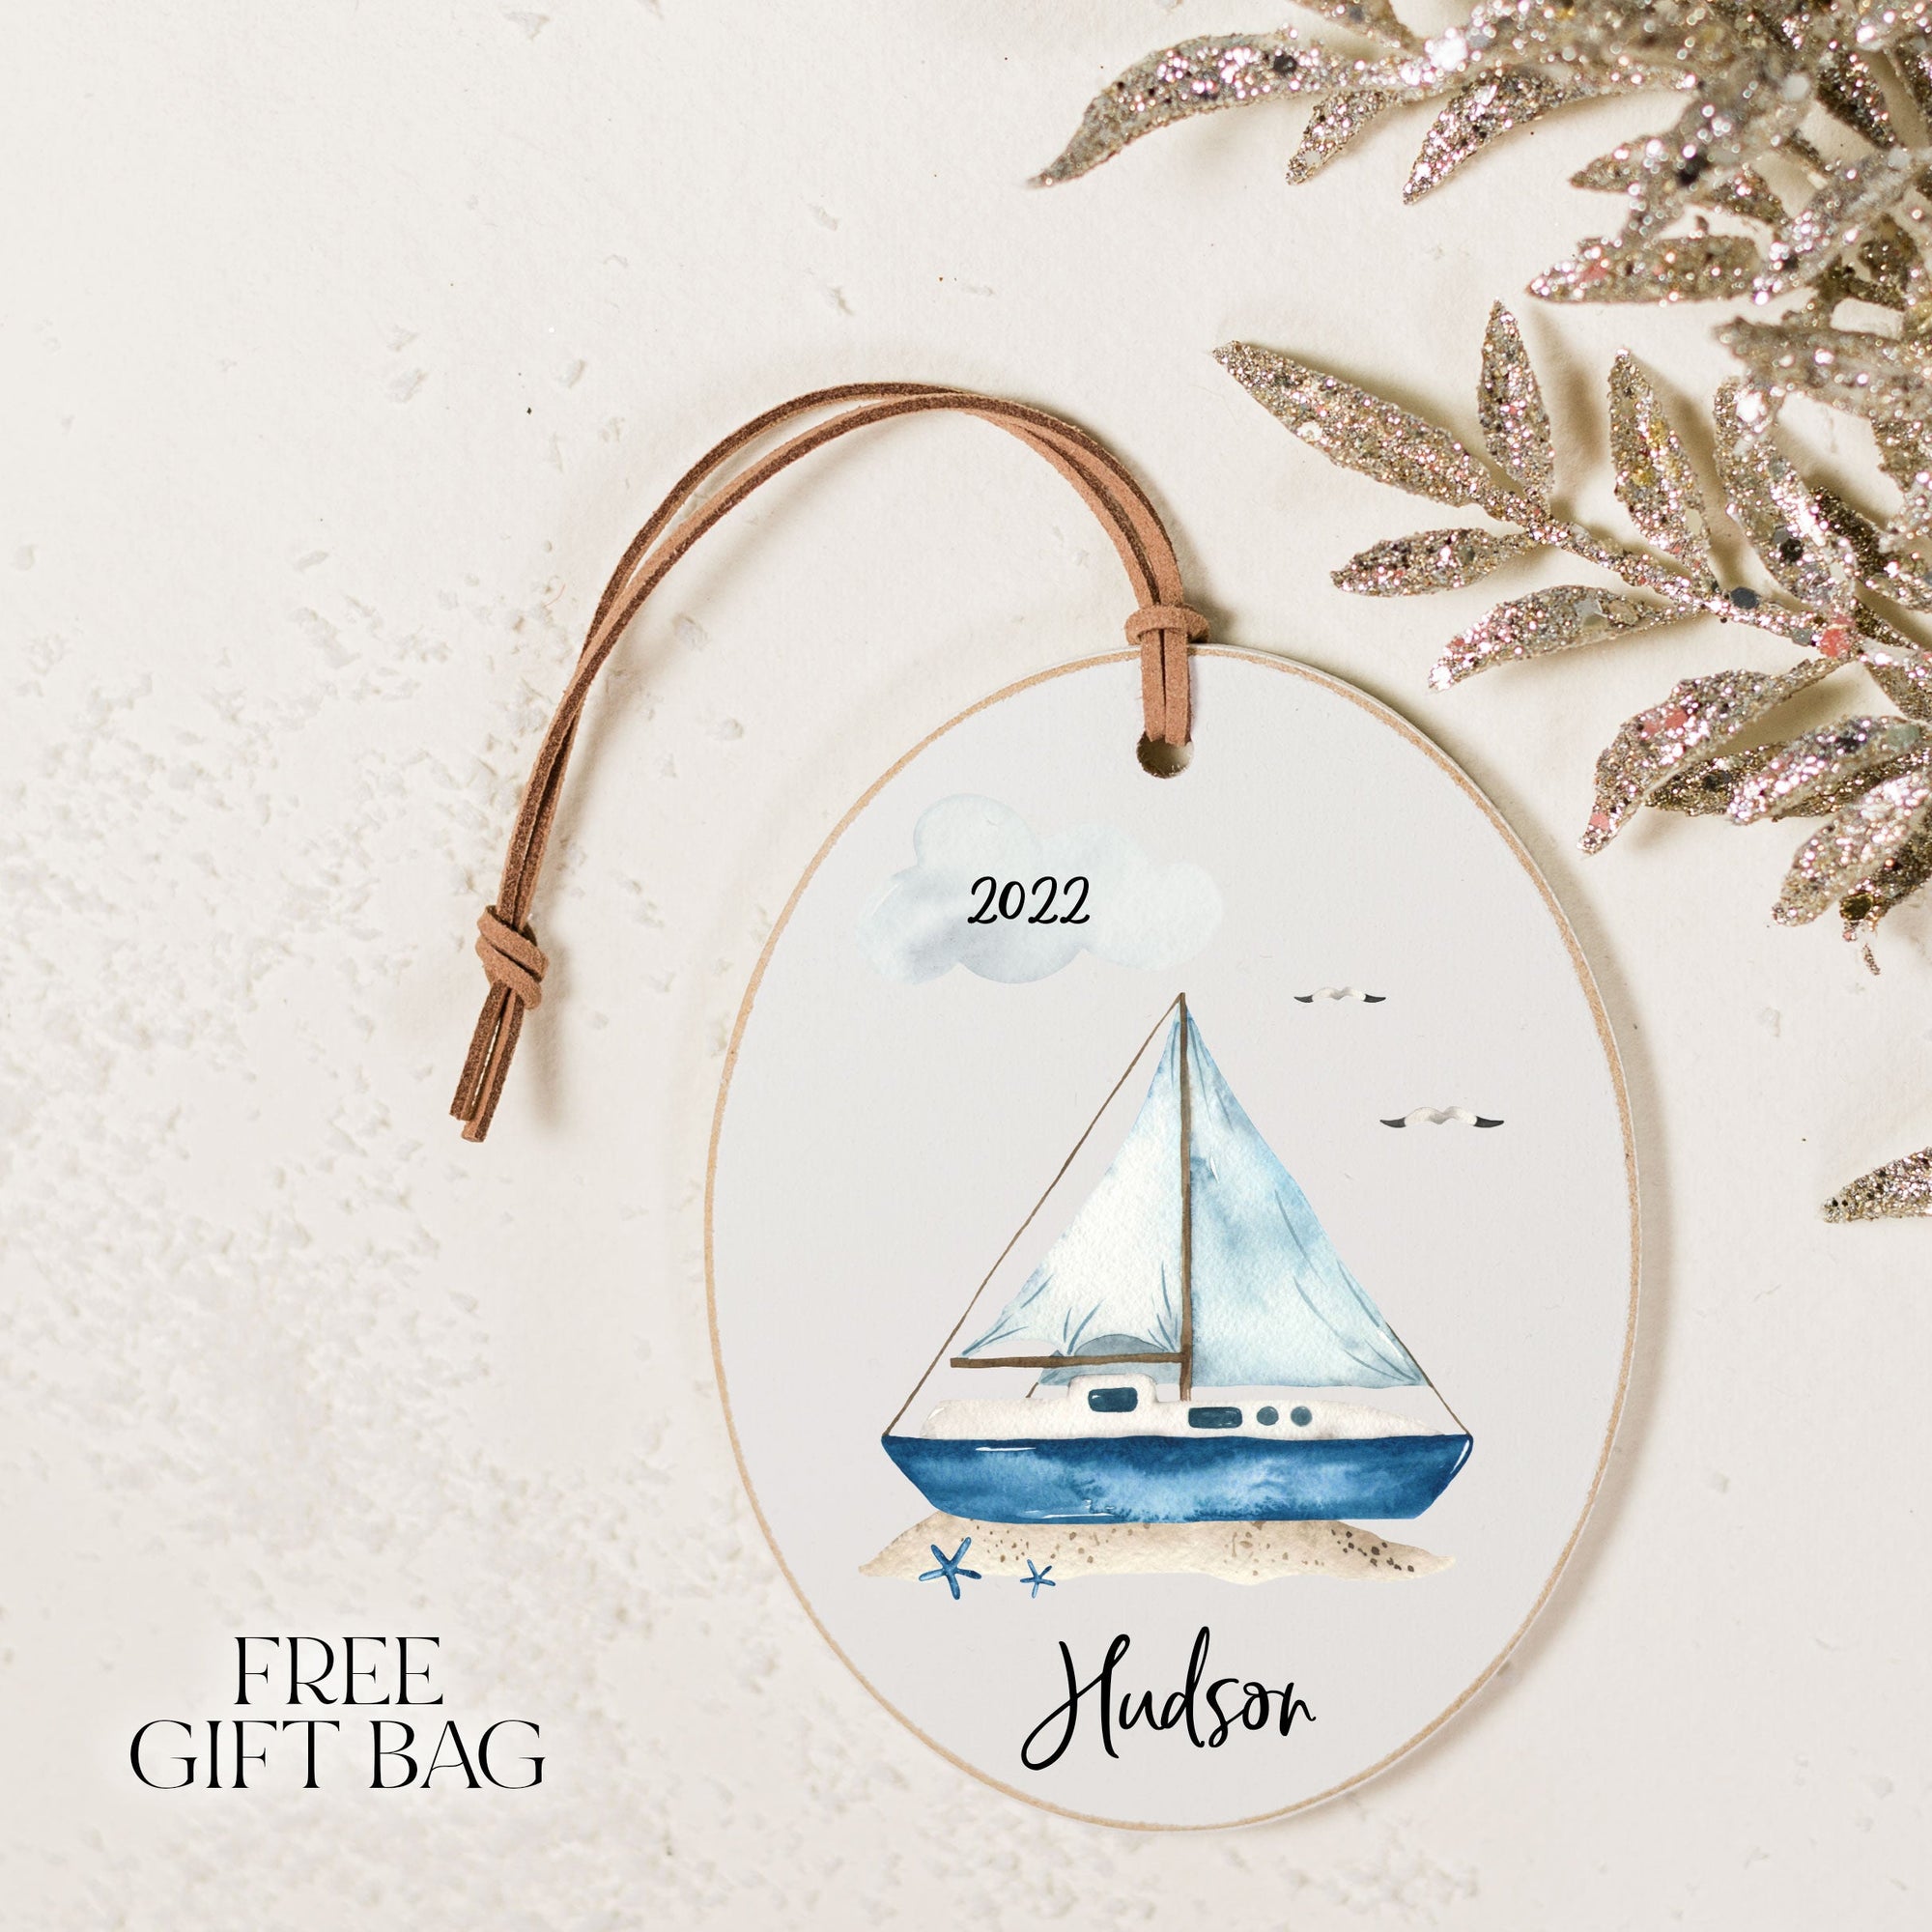 Customizable Ornament | Sail Boat Holiday Ornaments The WAREHOUSE Studio 